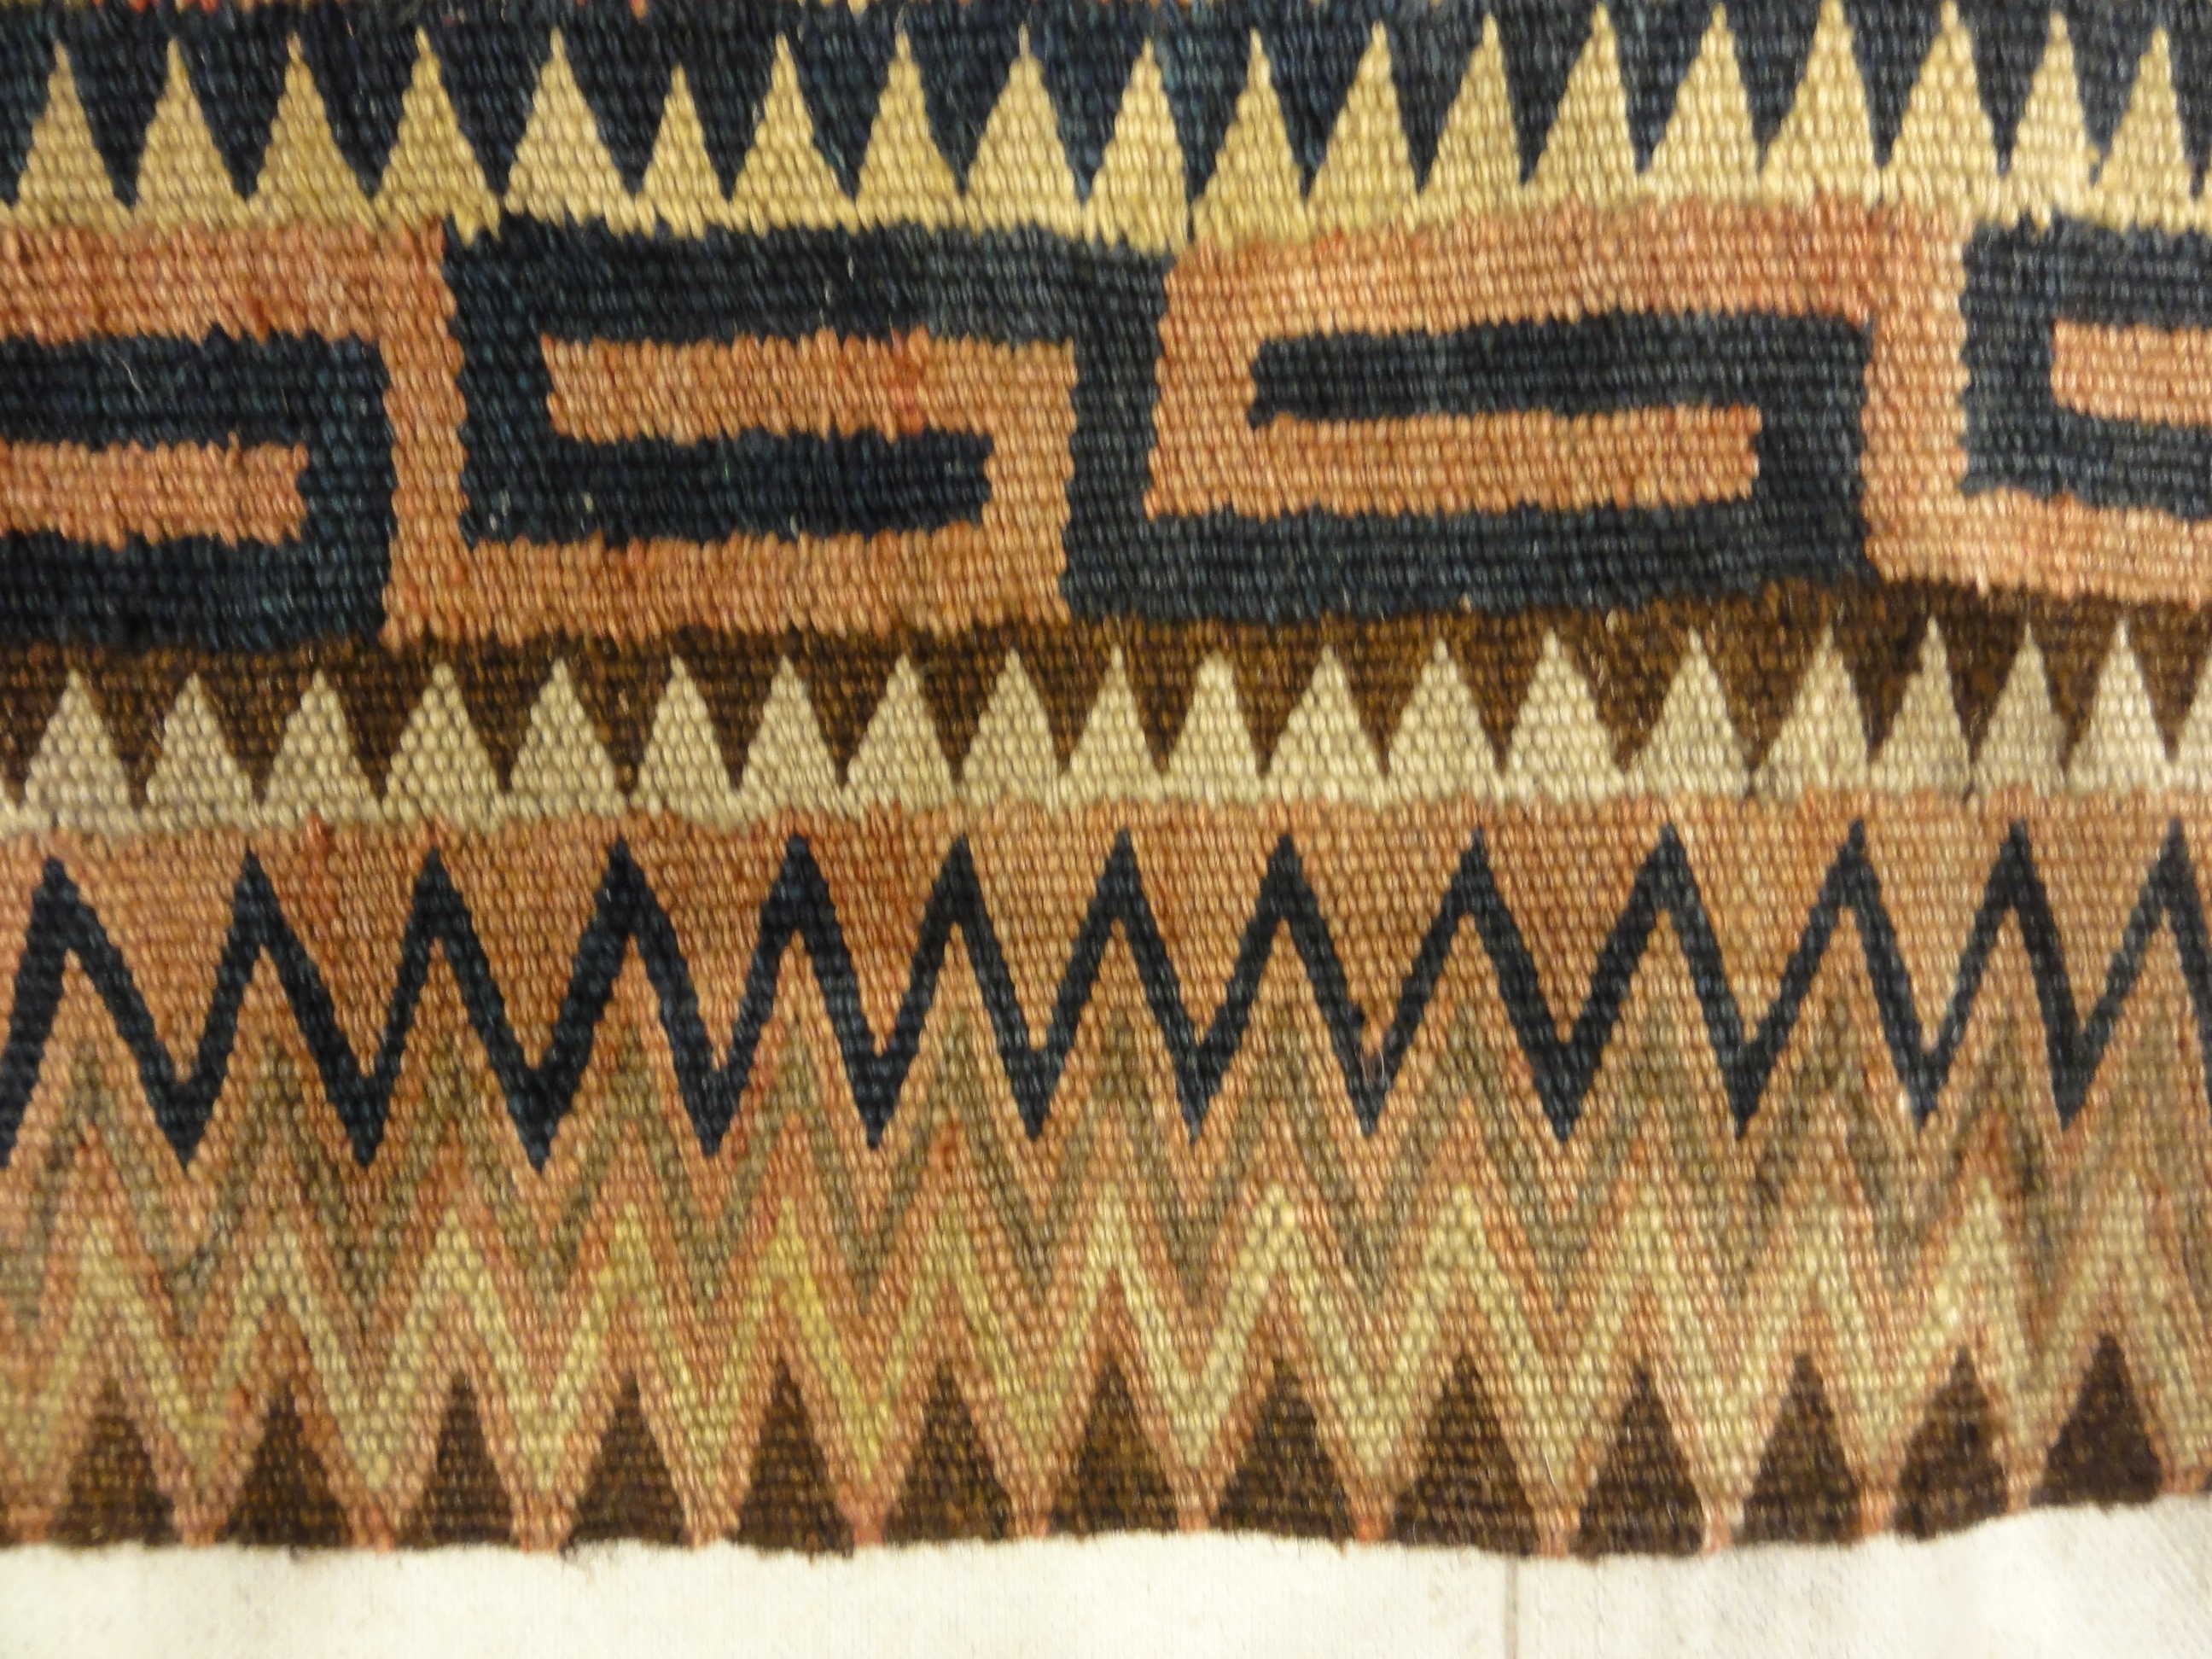 Uzbek Kelim Bag Face Saddle Bag. A piece of authentic genuine antique woven carpet art sold by Santa Barbara Design Center Rugs and More.